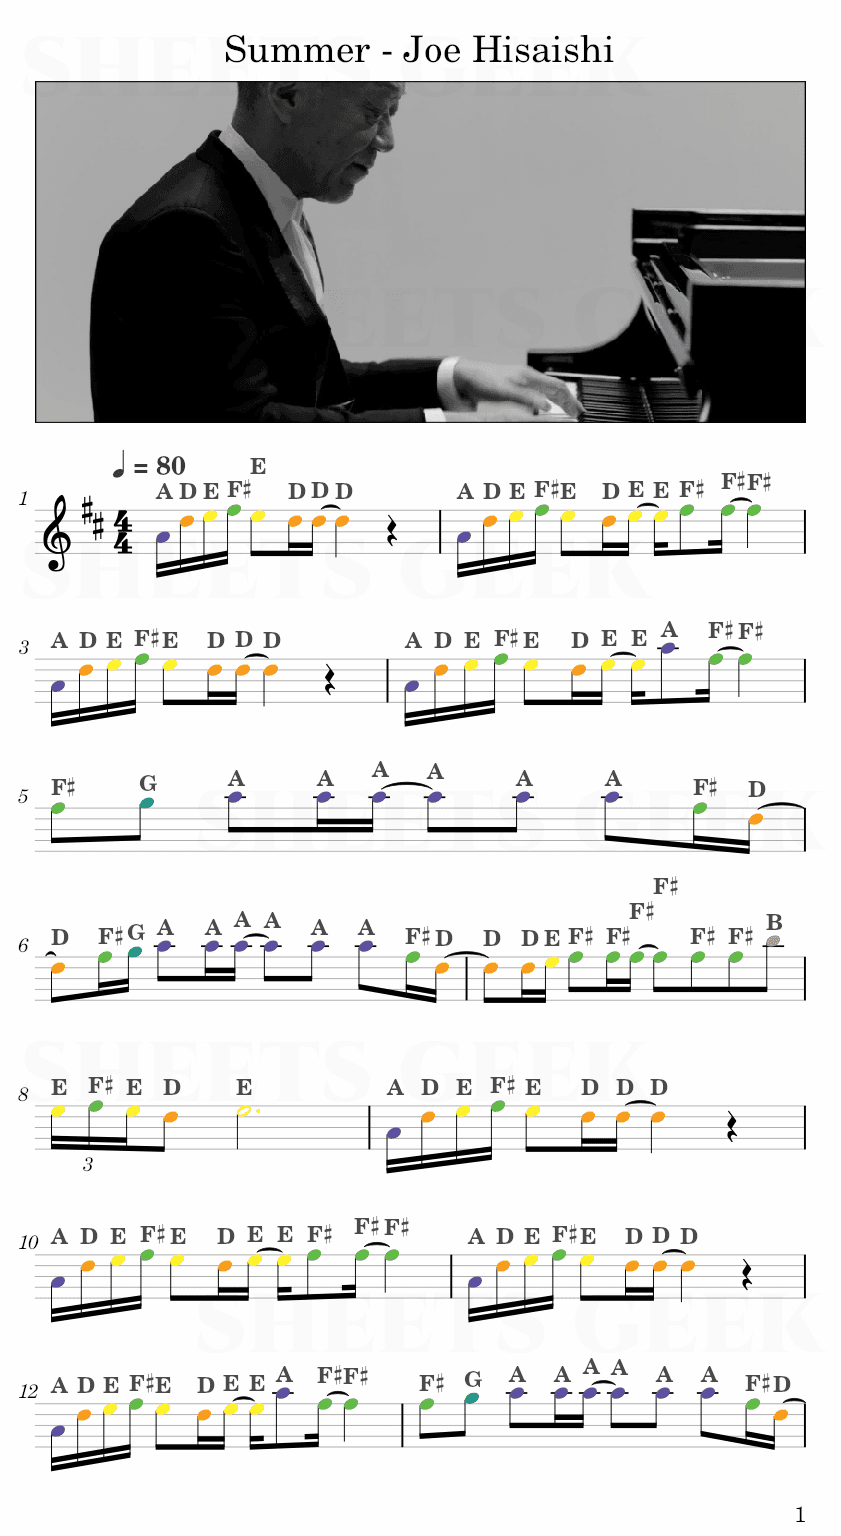 Summer - Joe Hisaishi Easy Sheet Music Free for piano, keyboard, flute, violin, sax, cello page 1